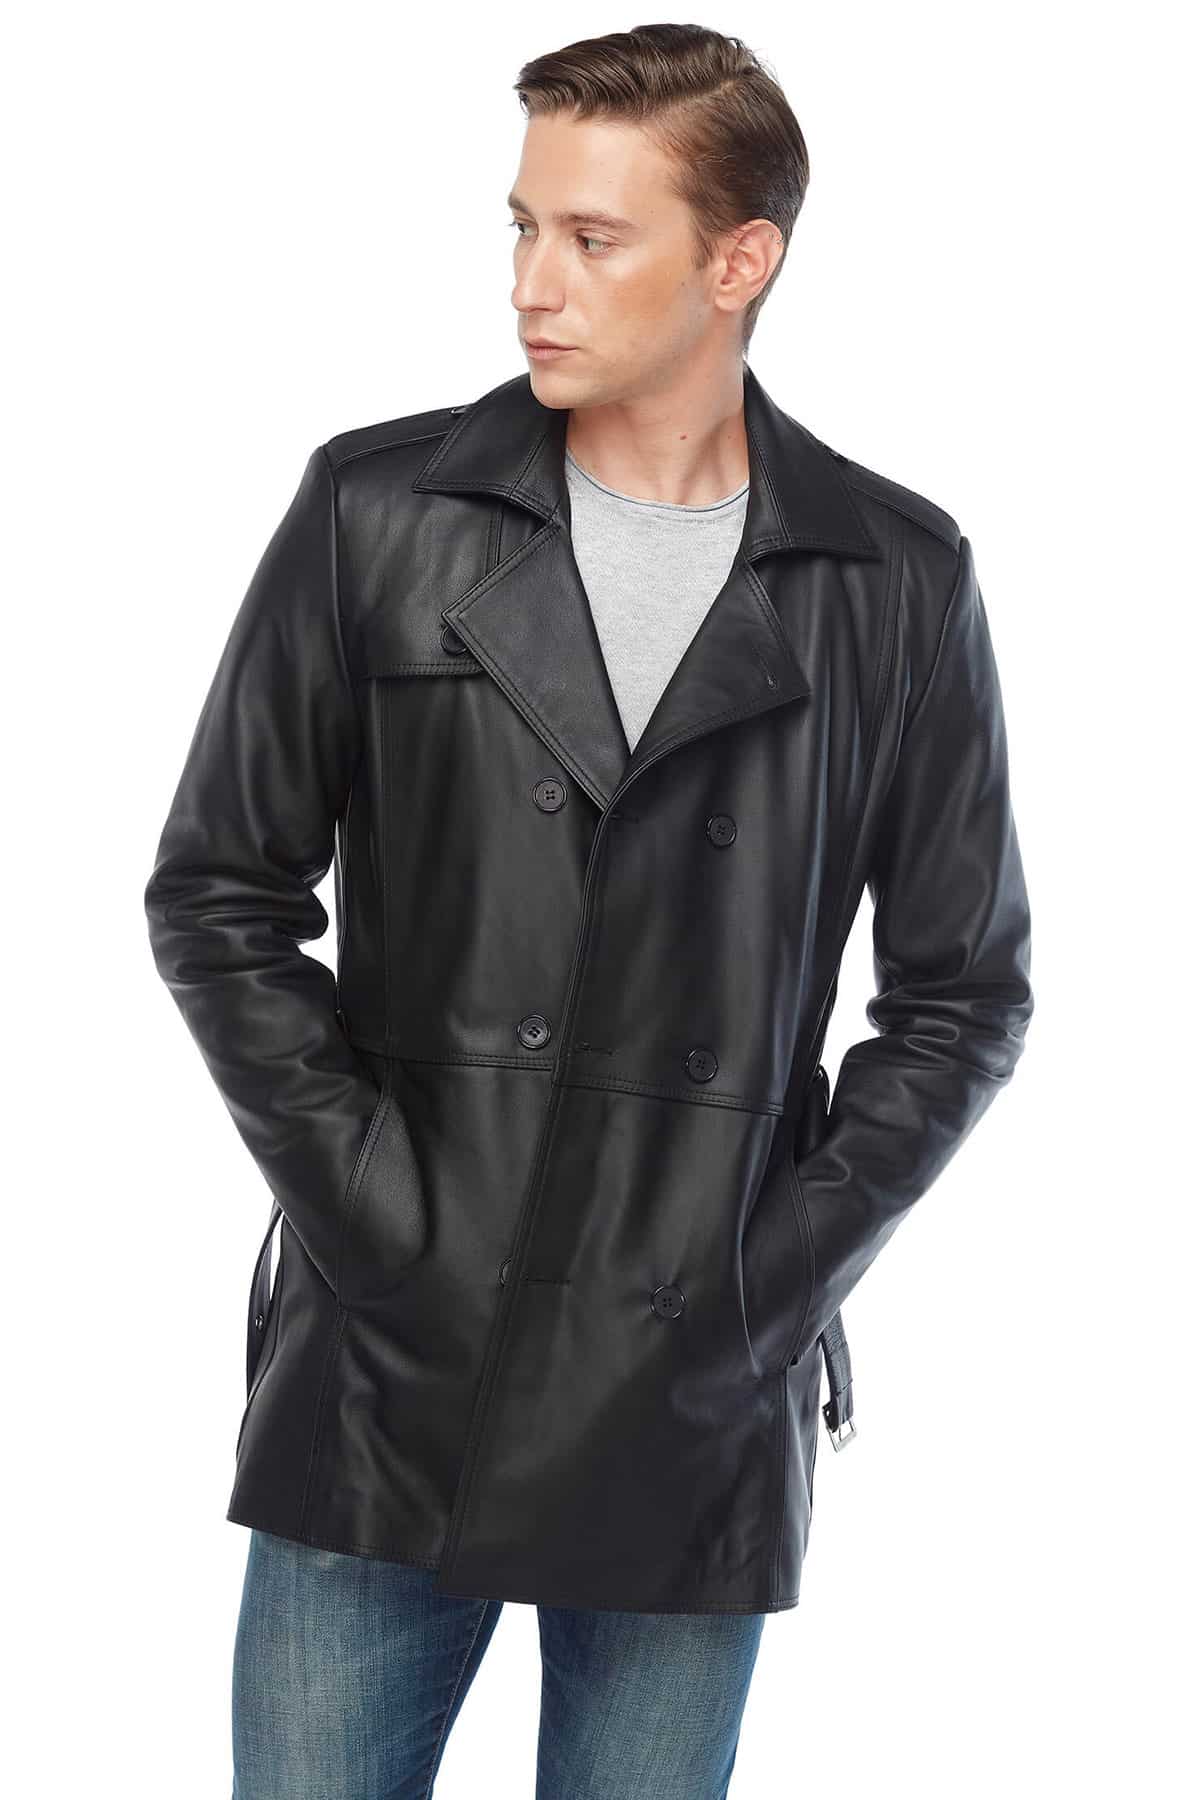 Antonio Banderas Real Leather Black Trench Coat Posing